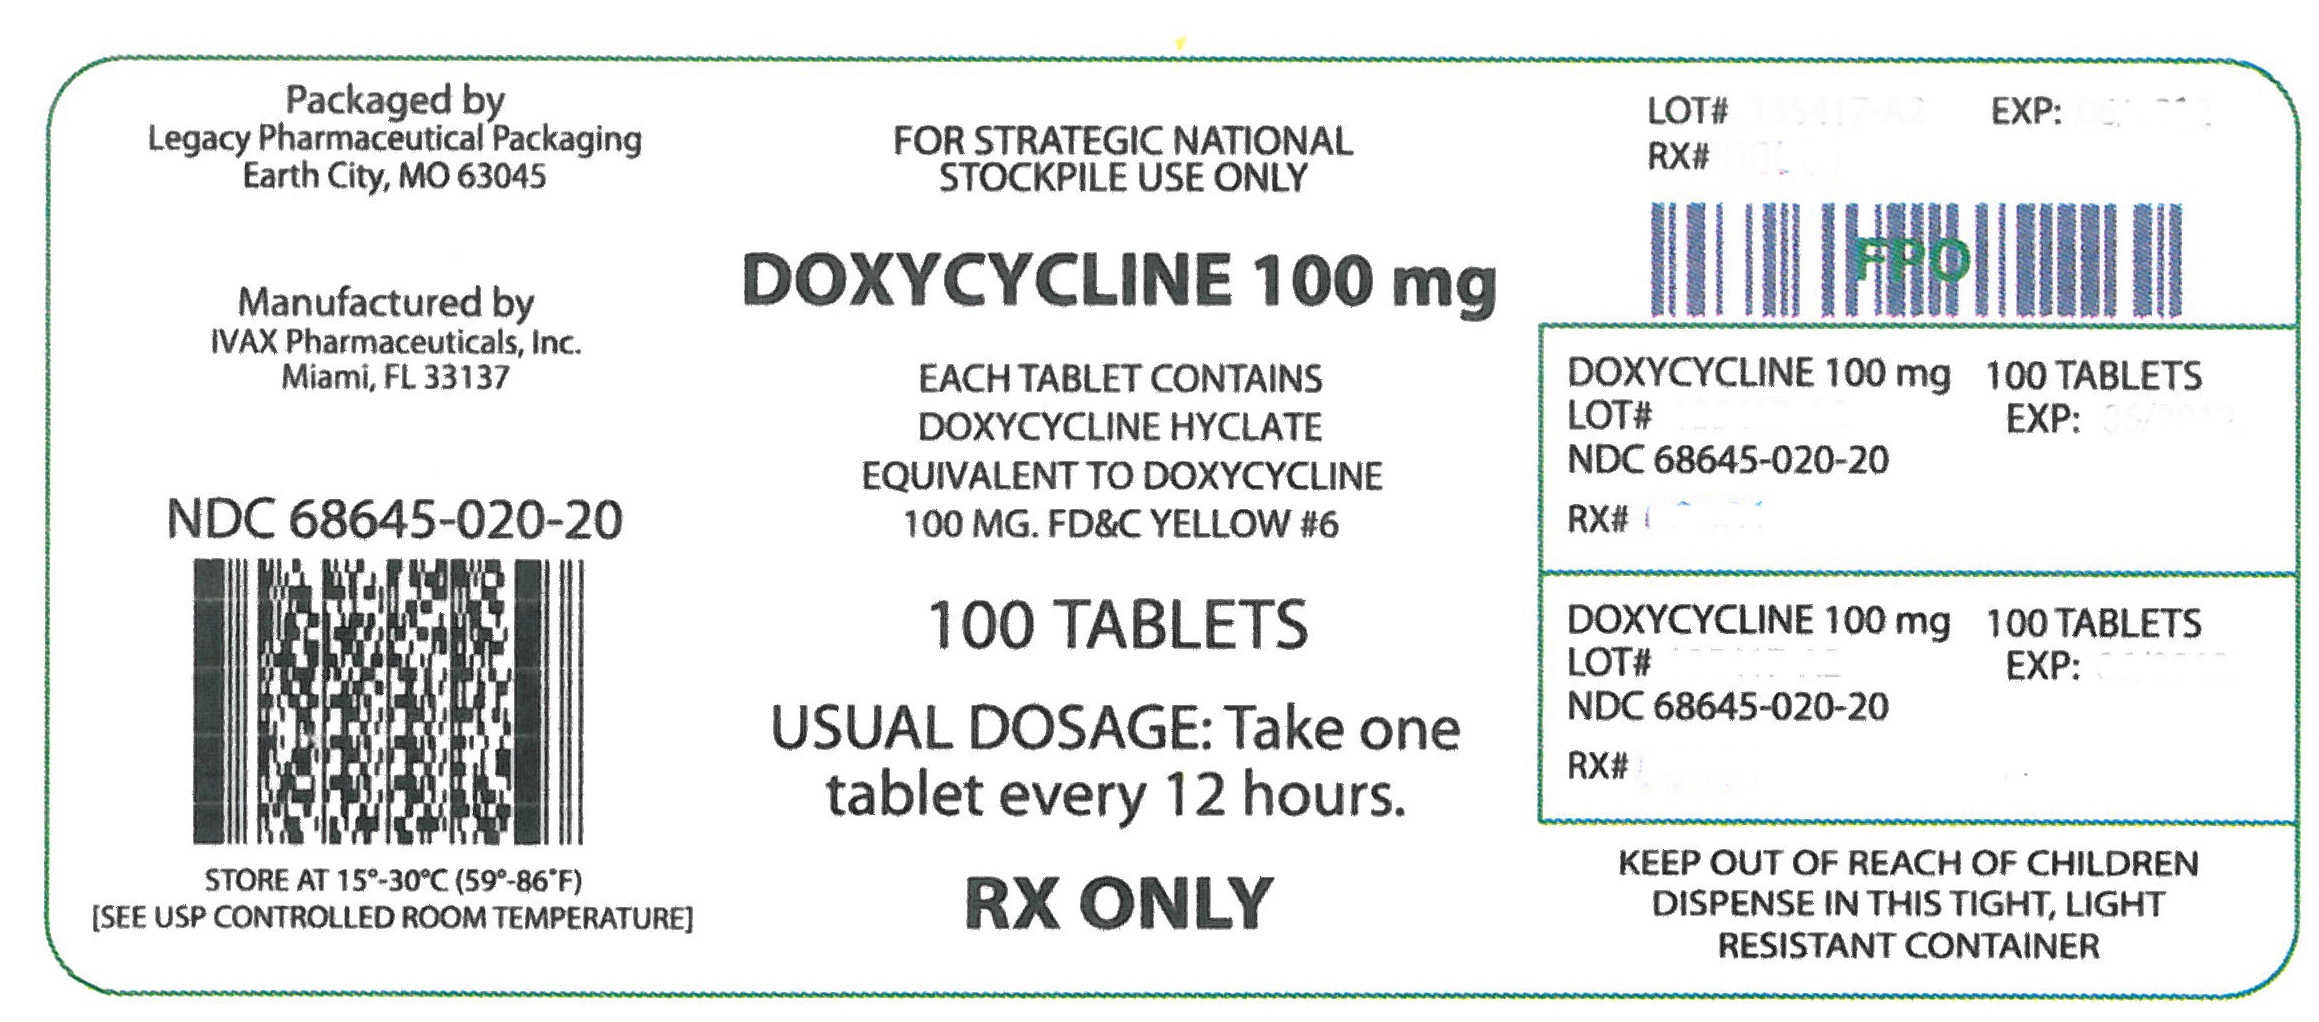 NDC 68645-020-20

Doxycycline 100mg

100 tablets

Rx Only

